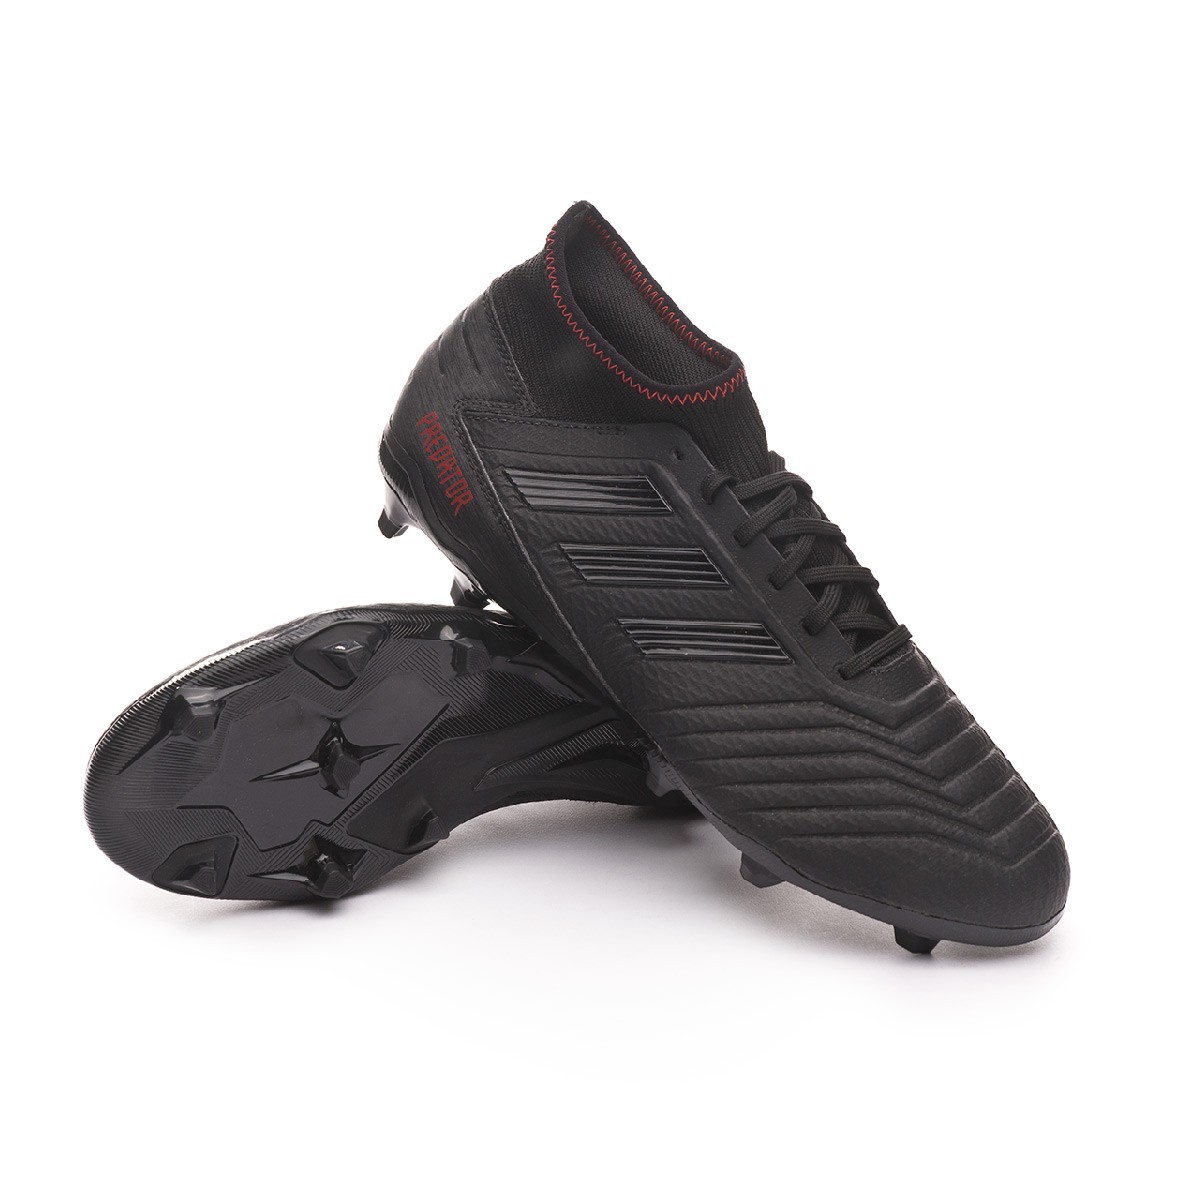 adidas predator 19.3 fg football boots